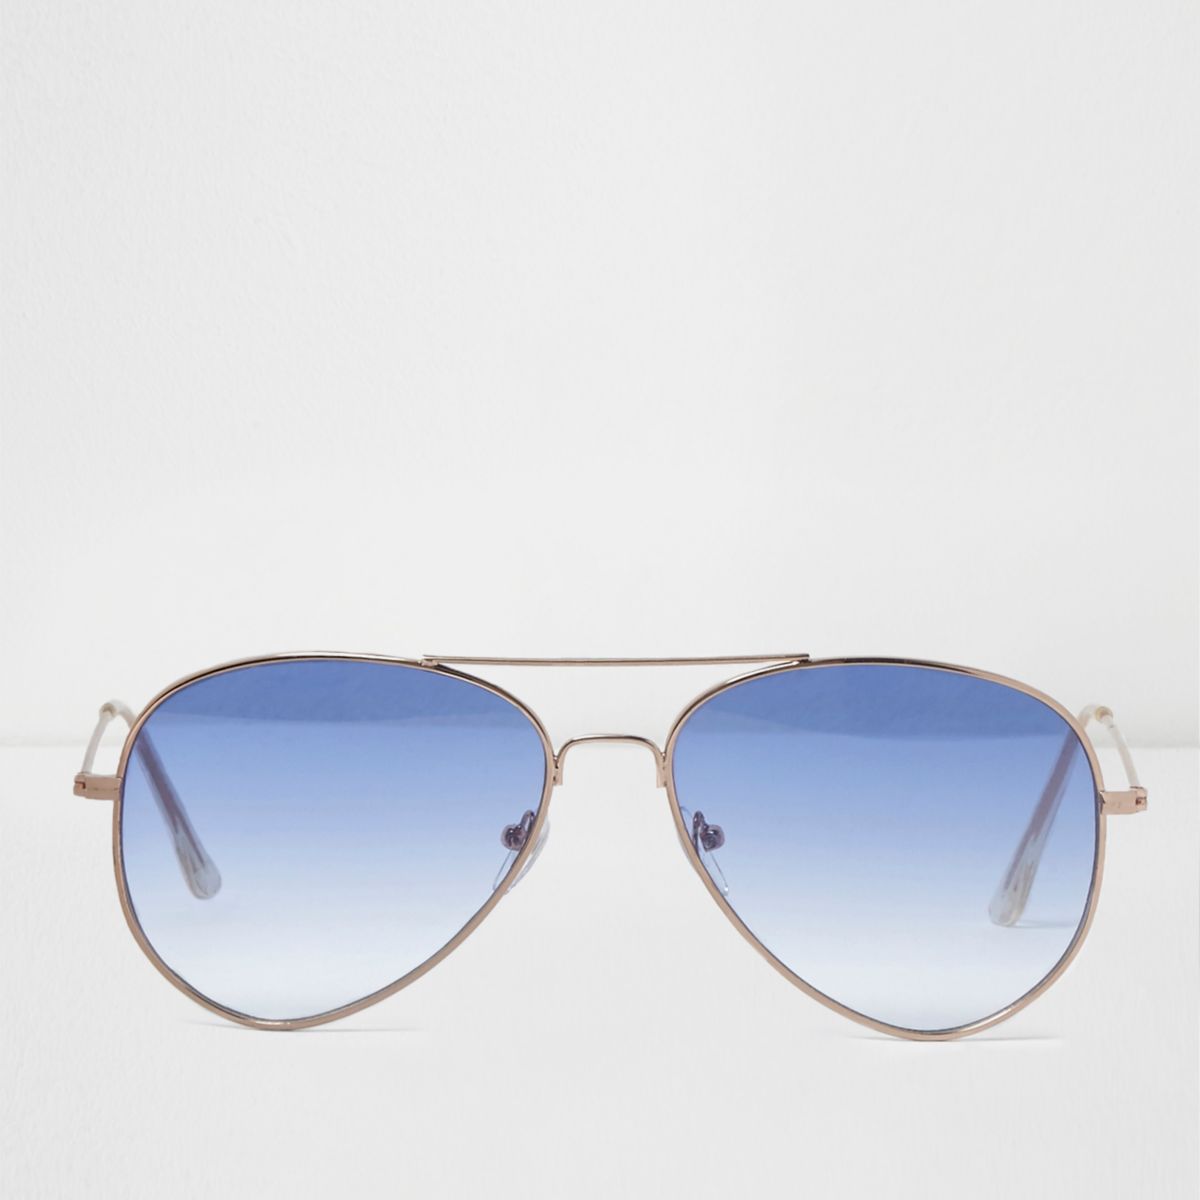 Blue Tinted Lenses Aviator Sunglasses Aviator Sunglasses Sunglasses Men